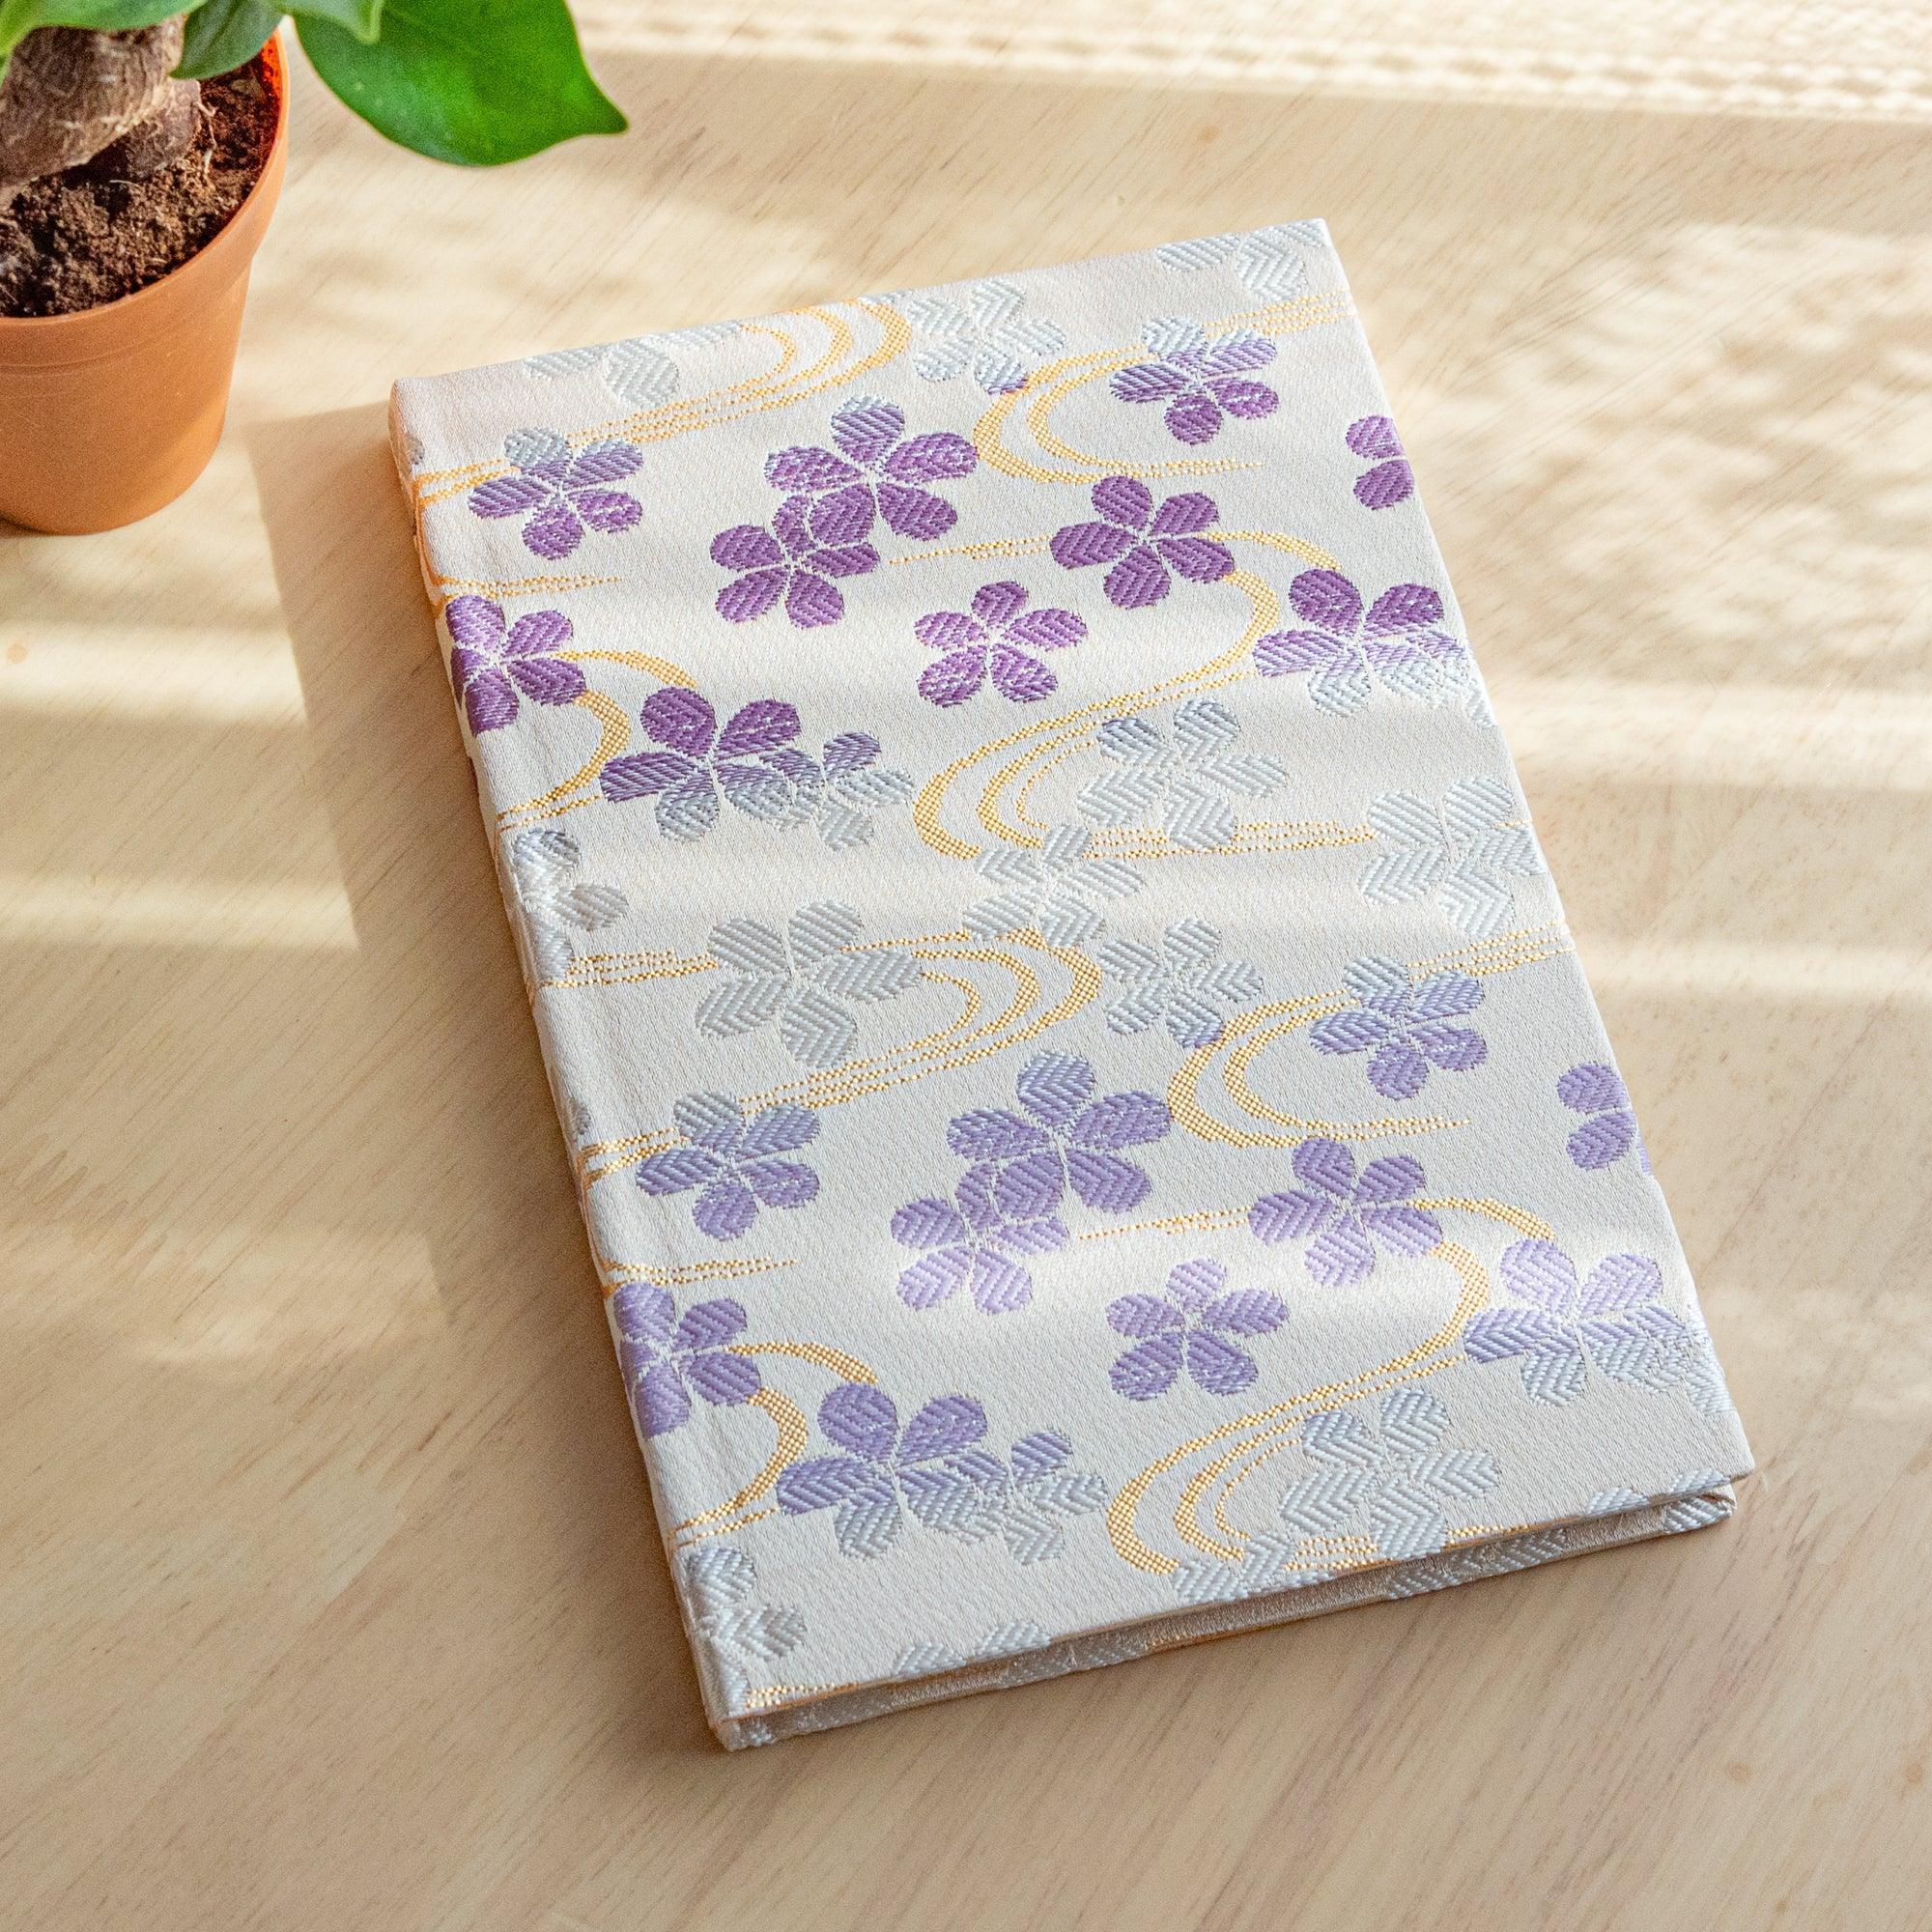 nishijin-textile-streamside-sakura-dreams-notebook-or-b6-morisan-komorebi-stationery-1 - Komorebi Stationery